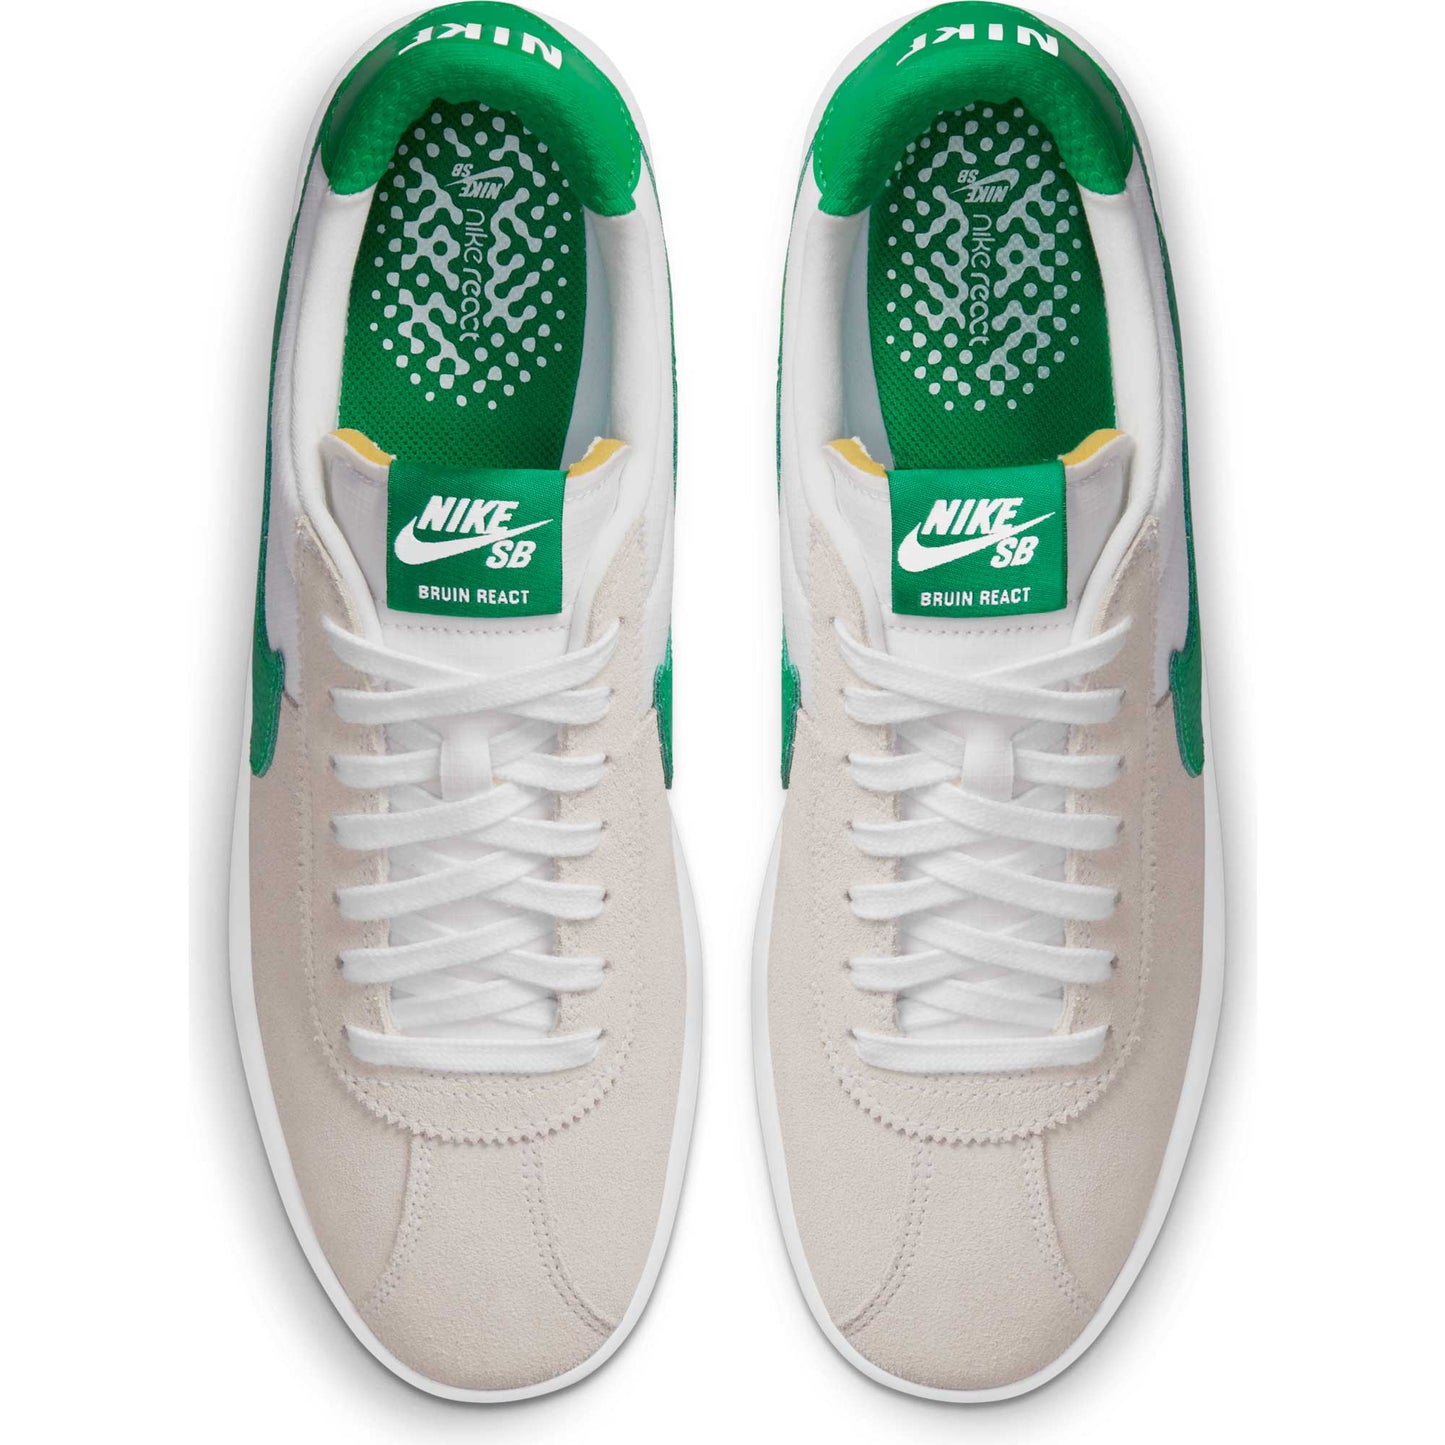 Nike SB Bruin React, white/lucky green-white-lucky green - Tiki Room Skateboards - 4